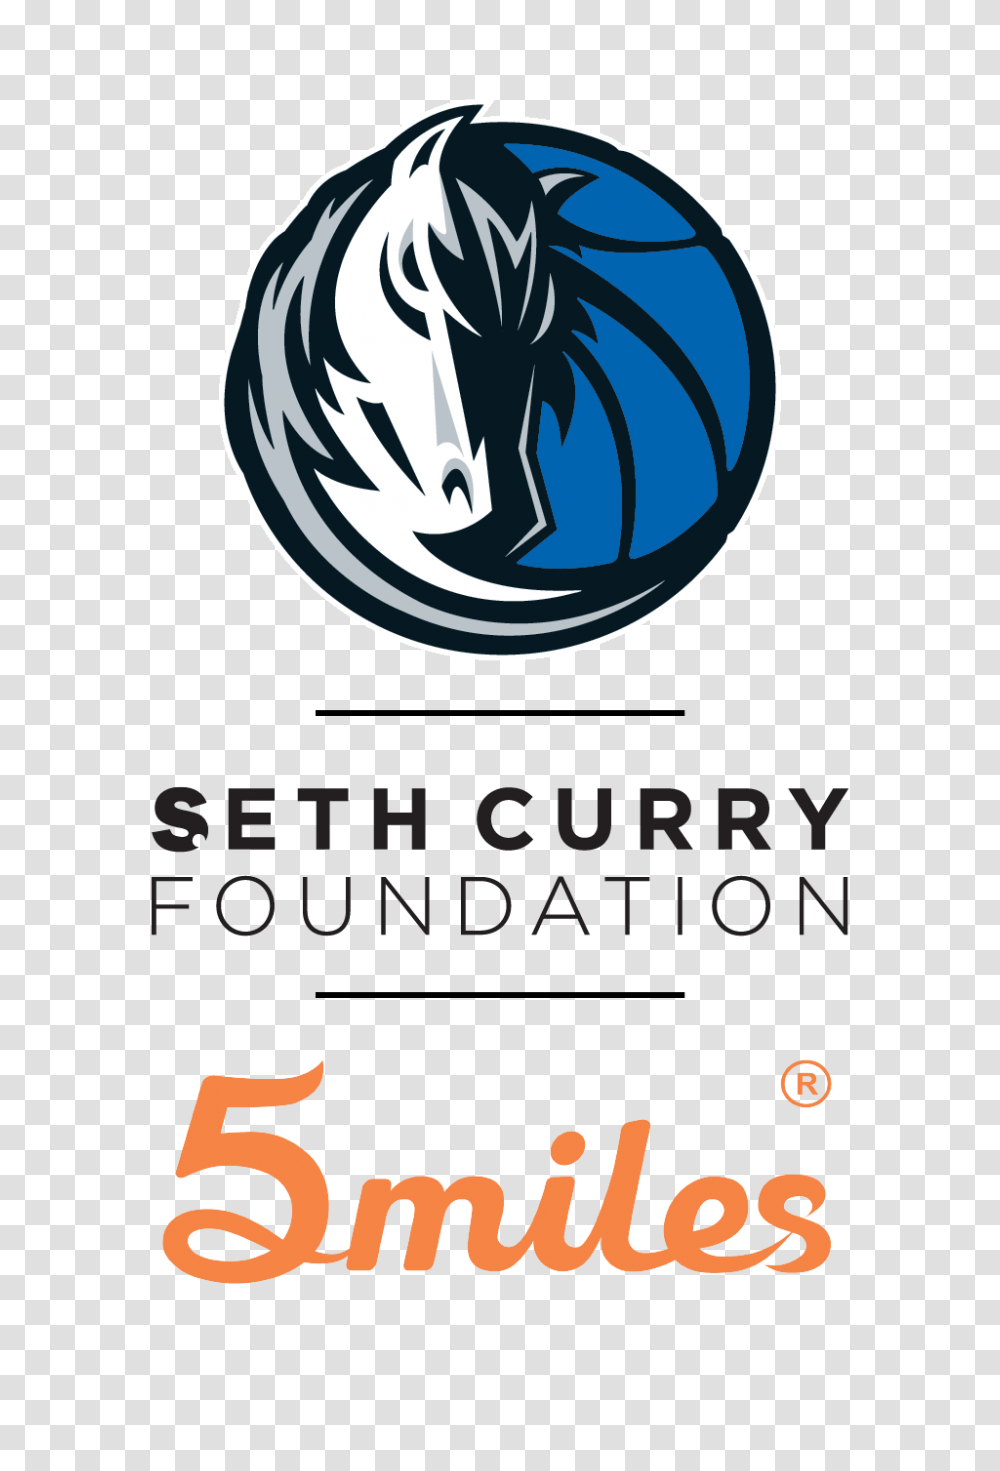 Seth Curry Foundation The Dallas Mavericks And Mark Cuban, Logo, Trademark, Poster Transparent Png